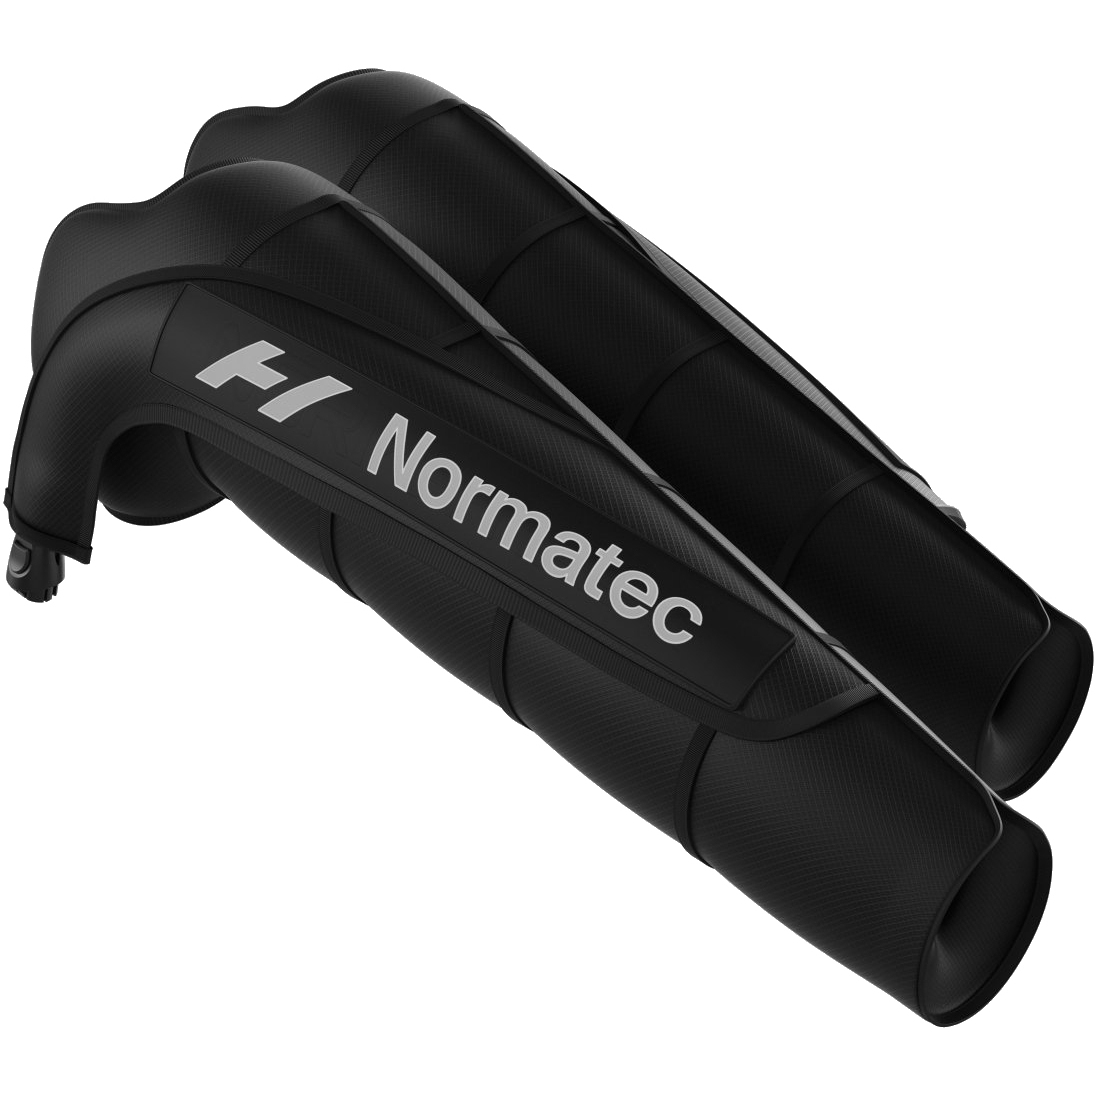 Imagen de Hyperice Accesorios para Brazos - Normatec 3 Arm Attachments - Par - negro